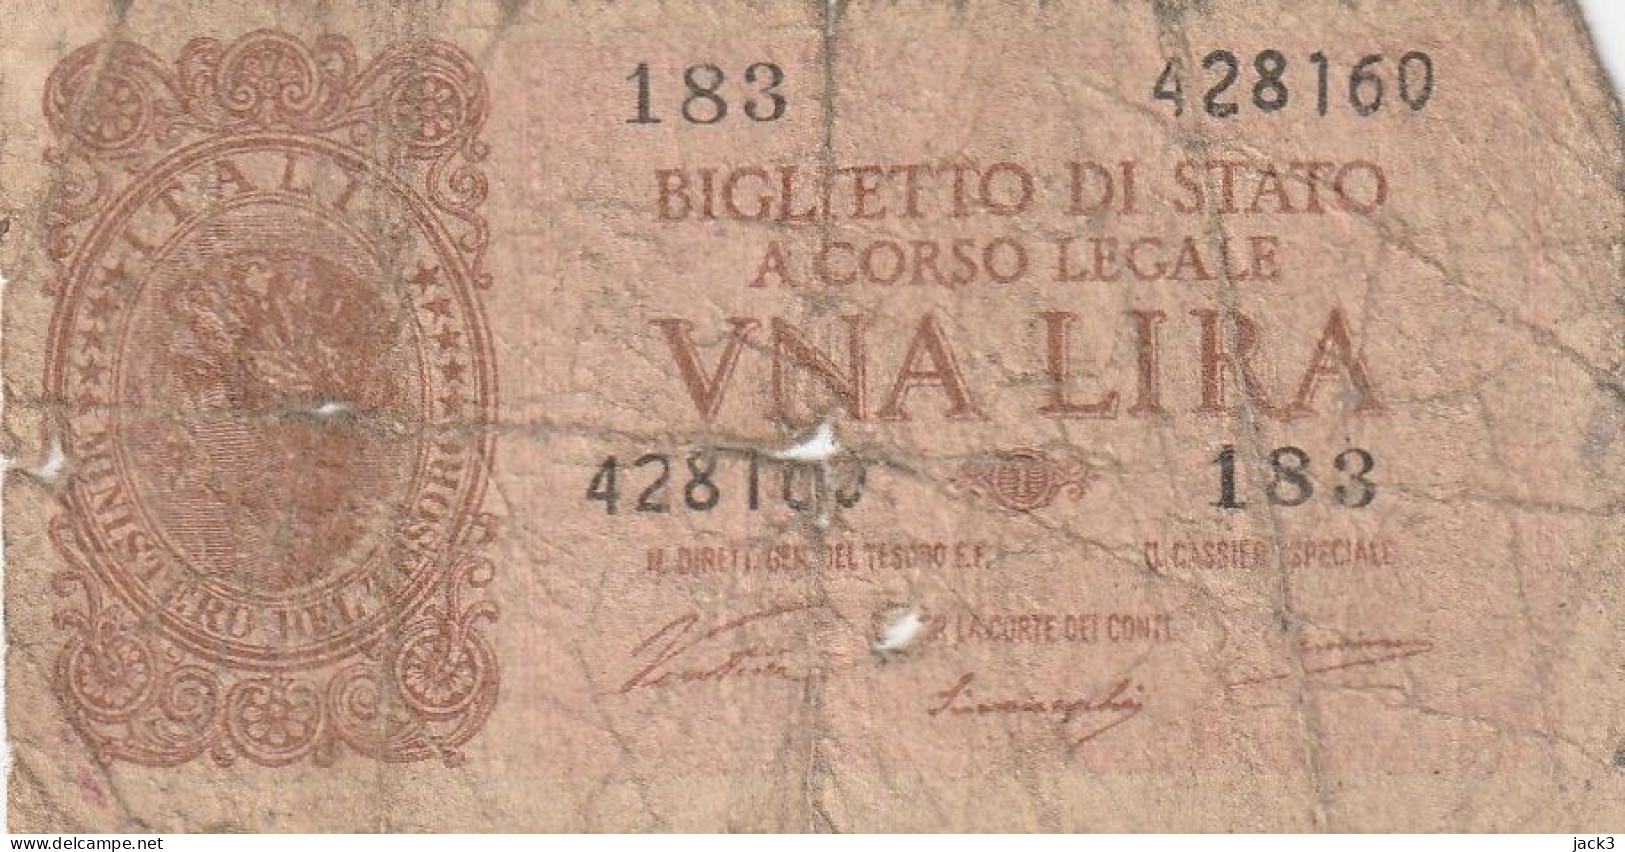 BANCONOTA - 1 LIRA BIGLIETTO DI STATO LUOGOTENENZA UMBERTO VENTURA 23/11/1944 - Italia – 1 Lira